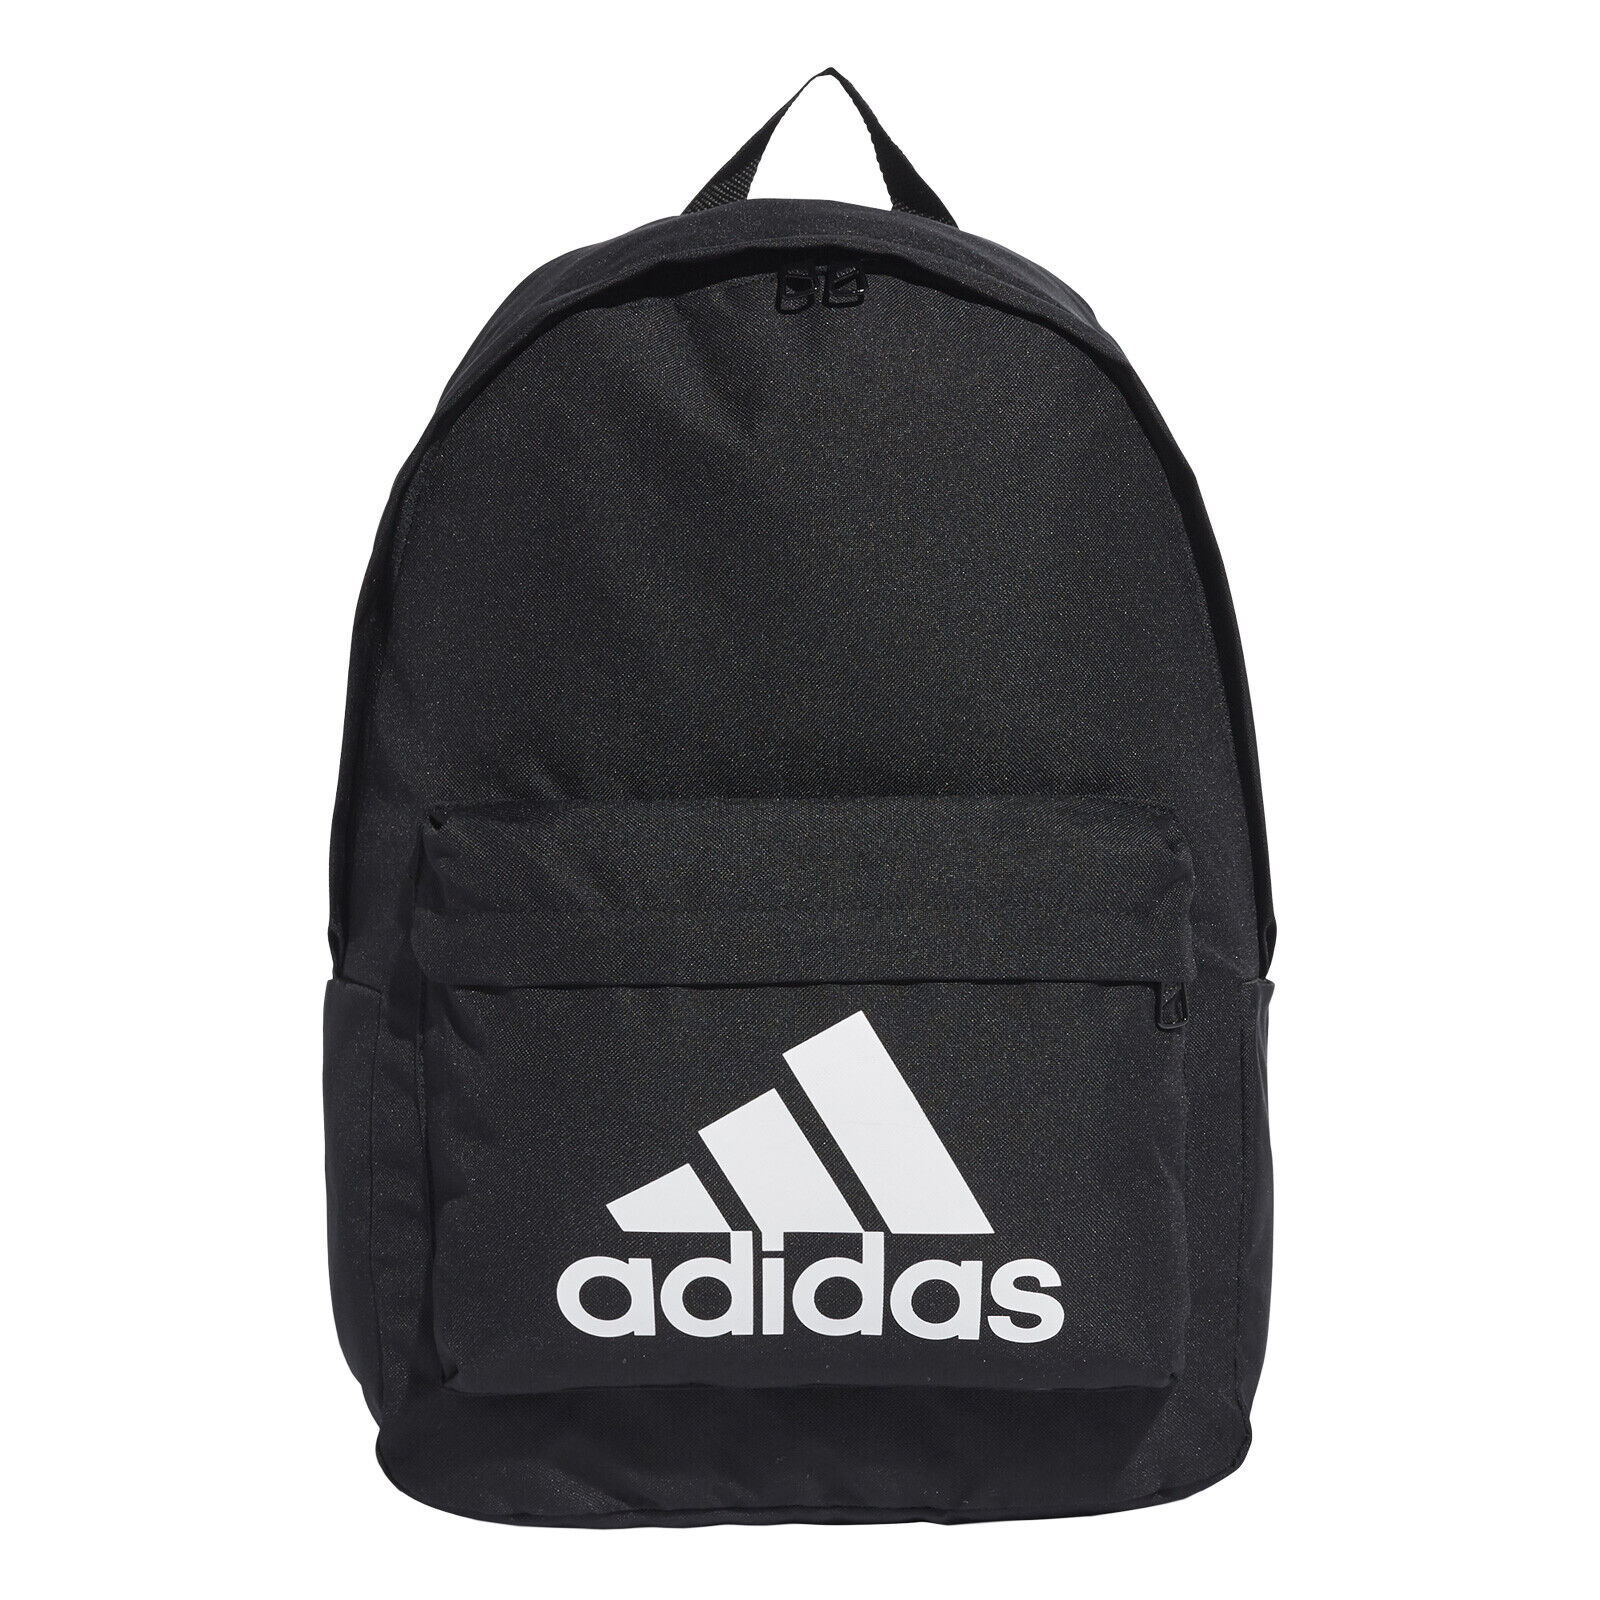 Рюкзак мужской Adidas CLASSIC BP S черный рюкзак мужской piquadro modus special ca4818mos n натур кожа